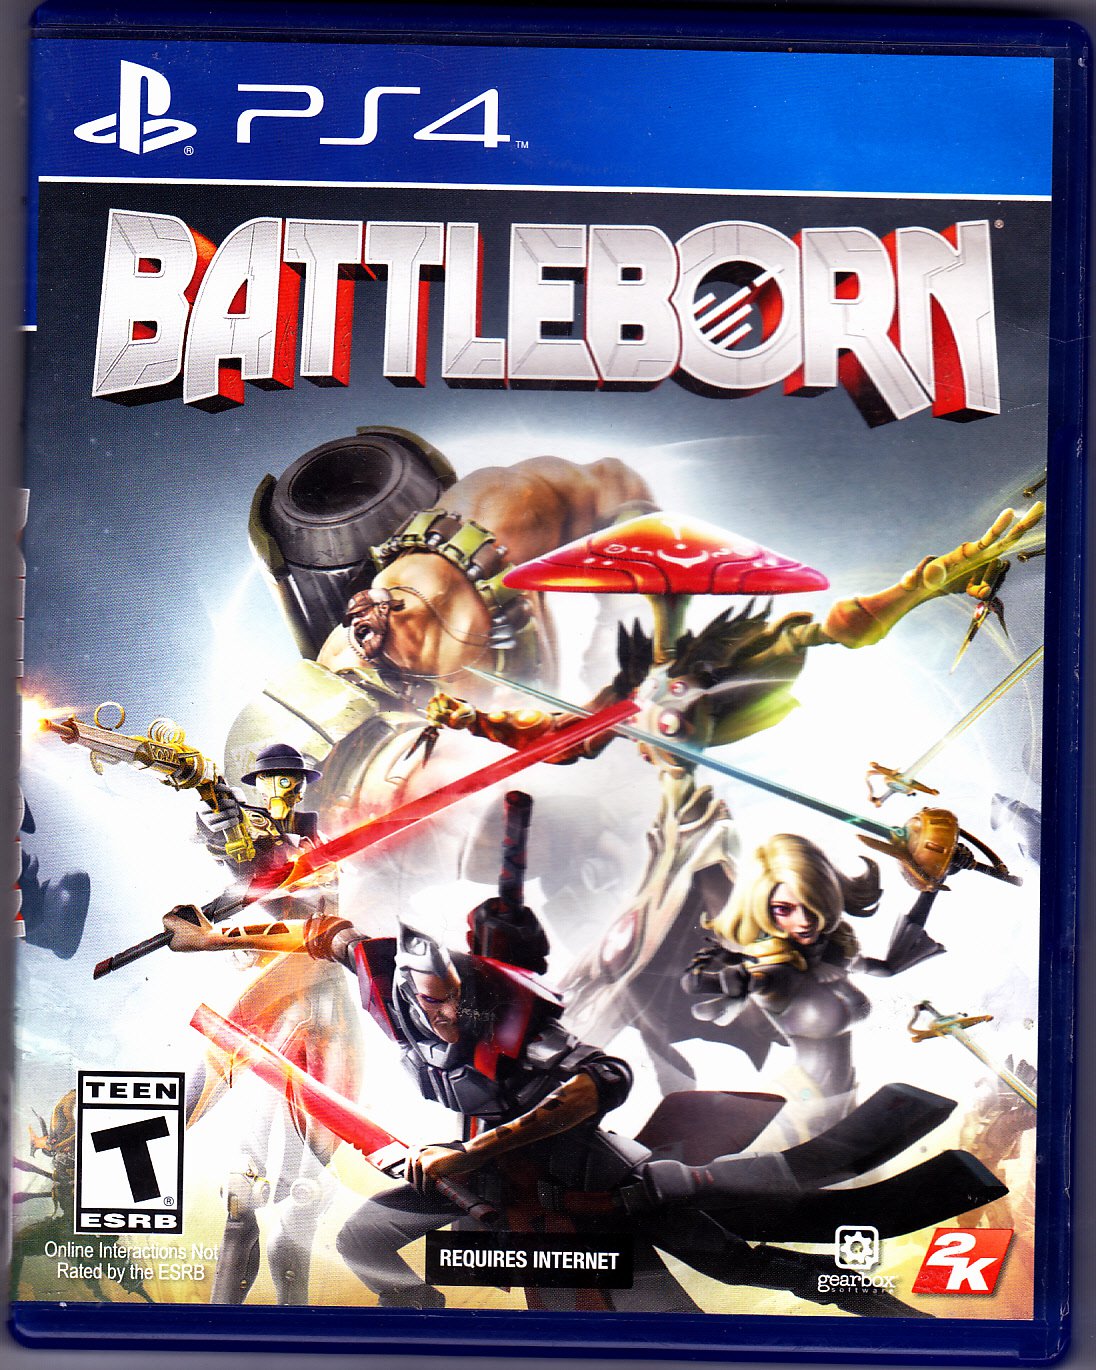 Battleborn - PlayStation 4, 2016 Video Game - Very Good